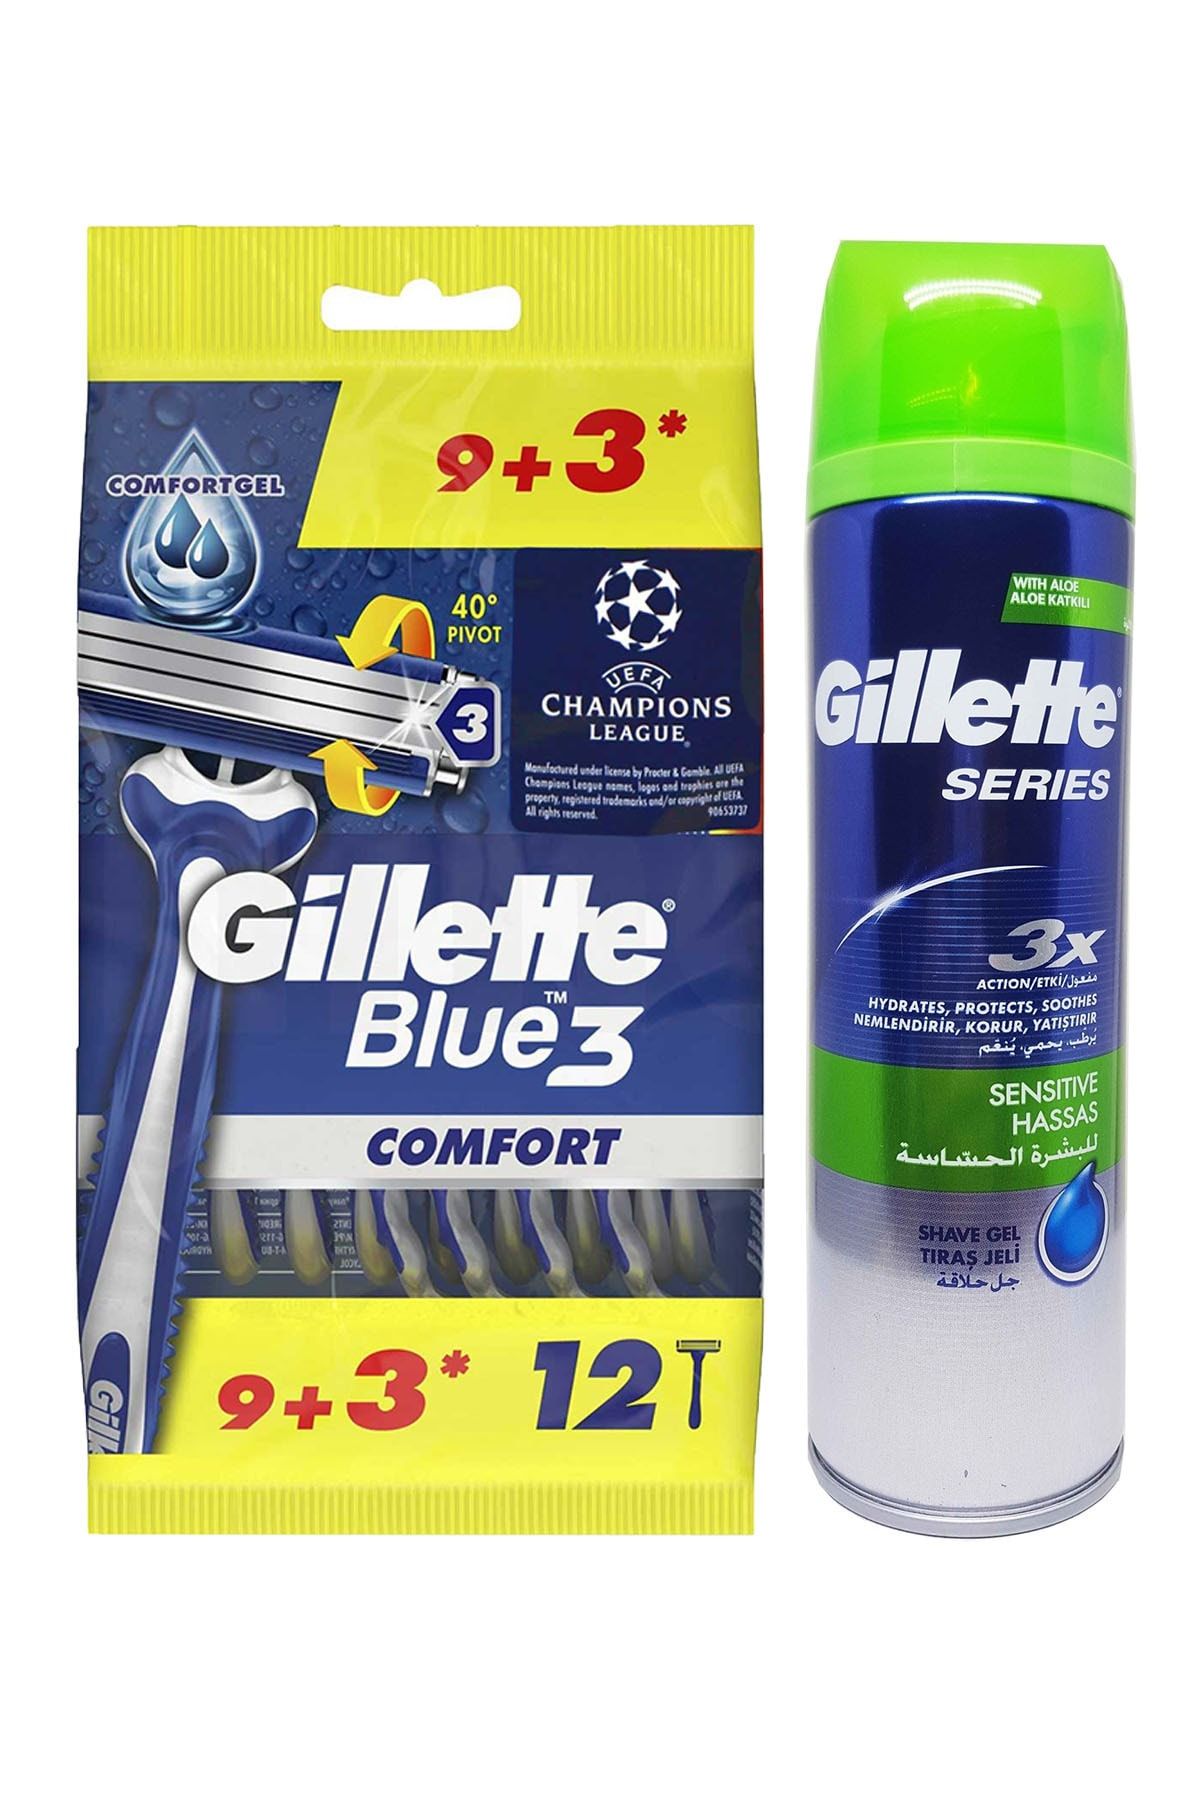 Gillette Blue 3 Tıraş Bıçağı 9+3 + Series 200 Ml Tıraş Jeli Hassas